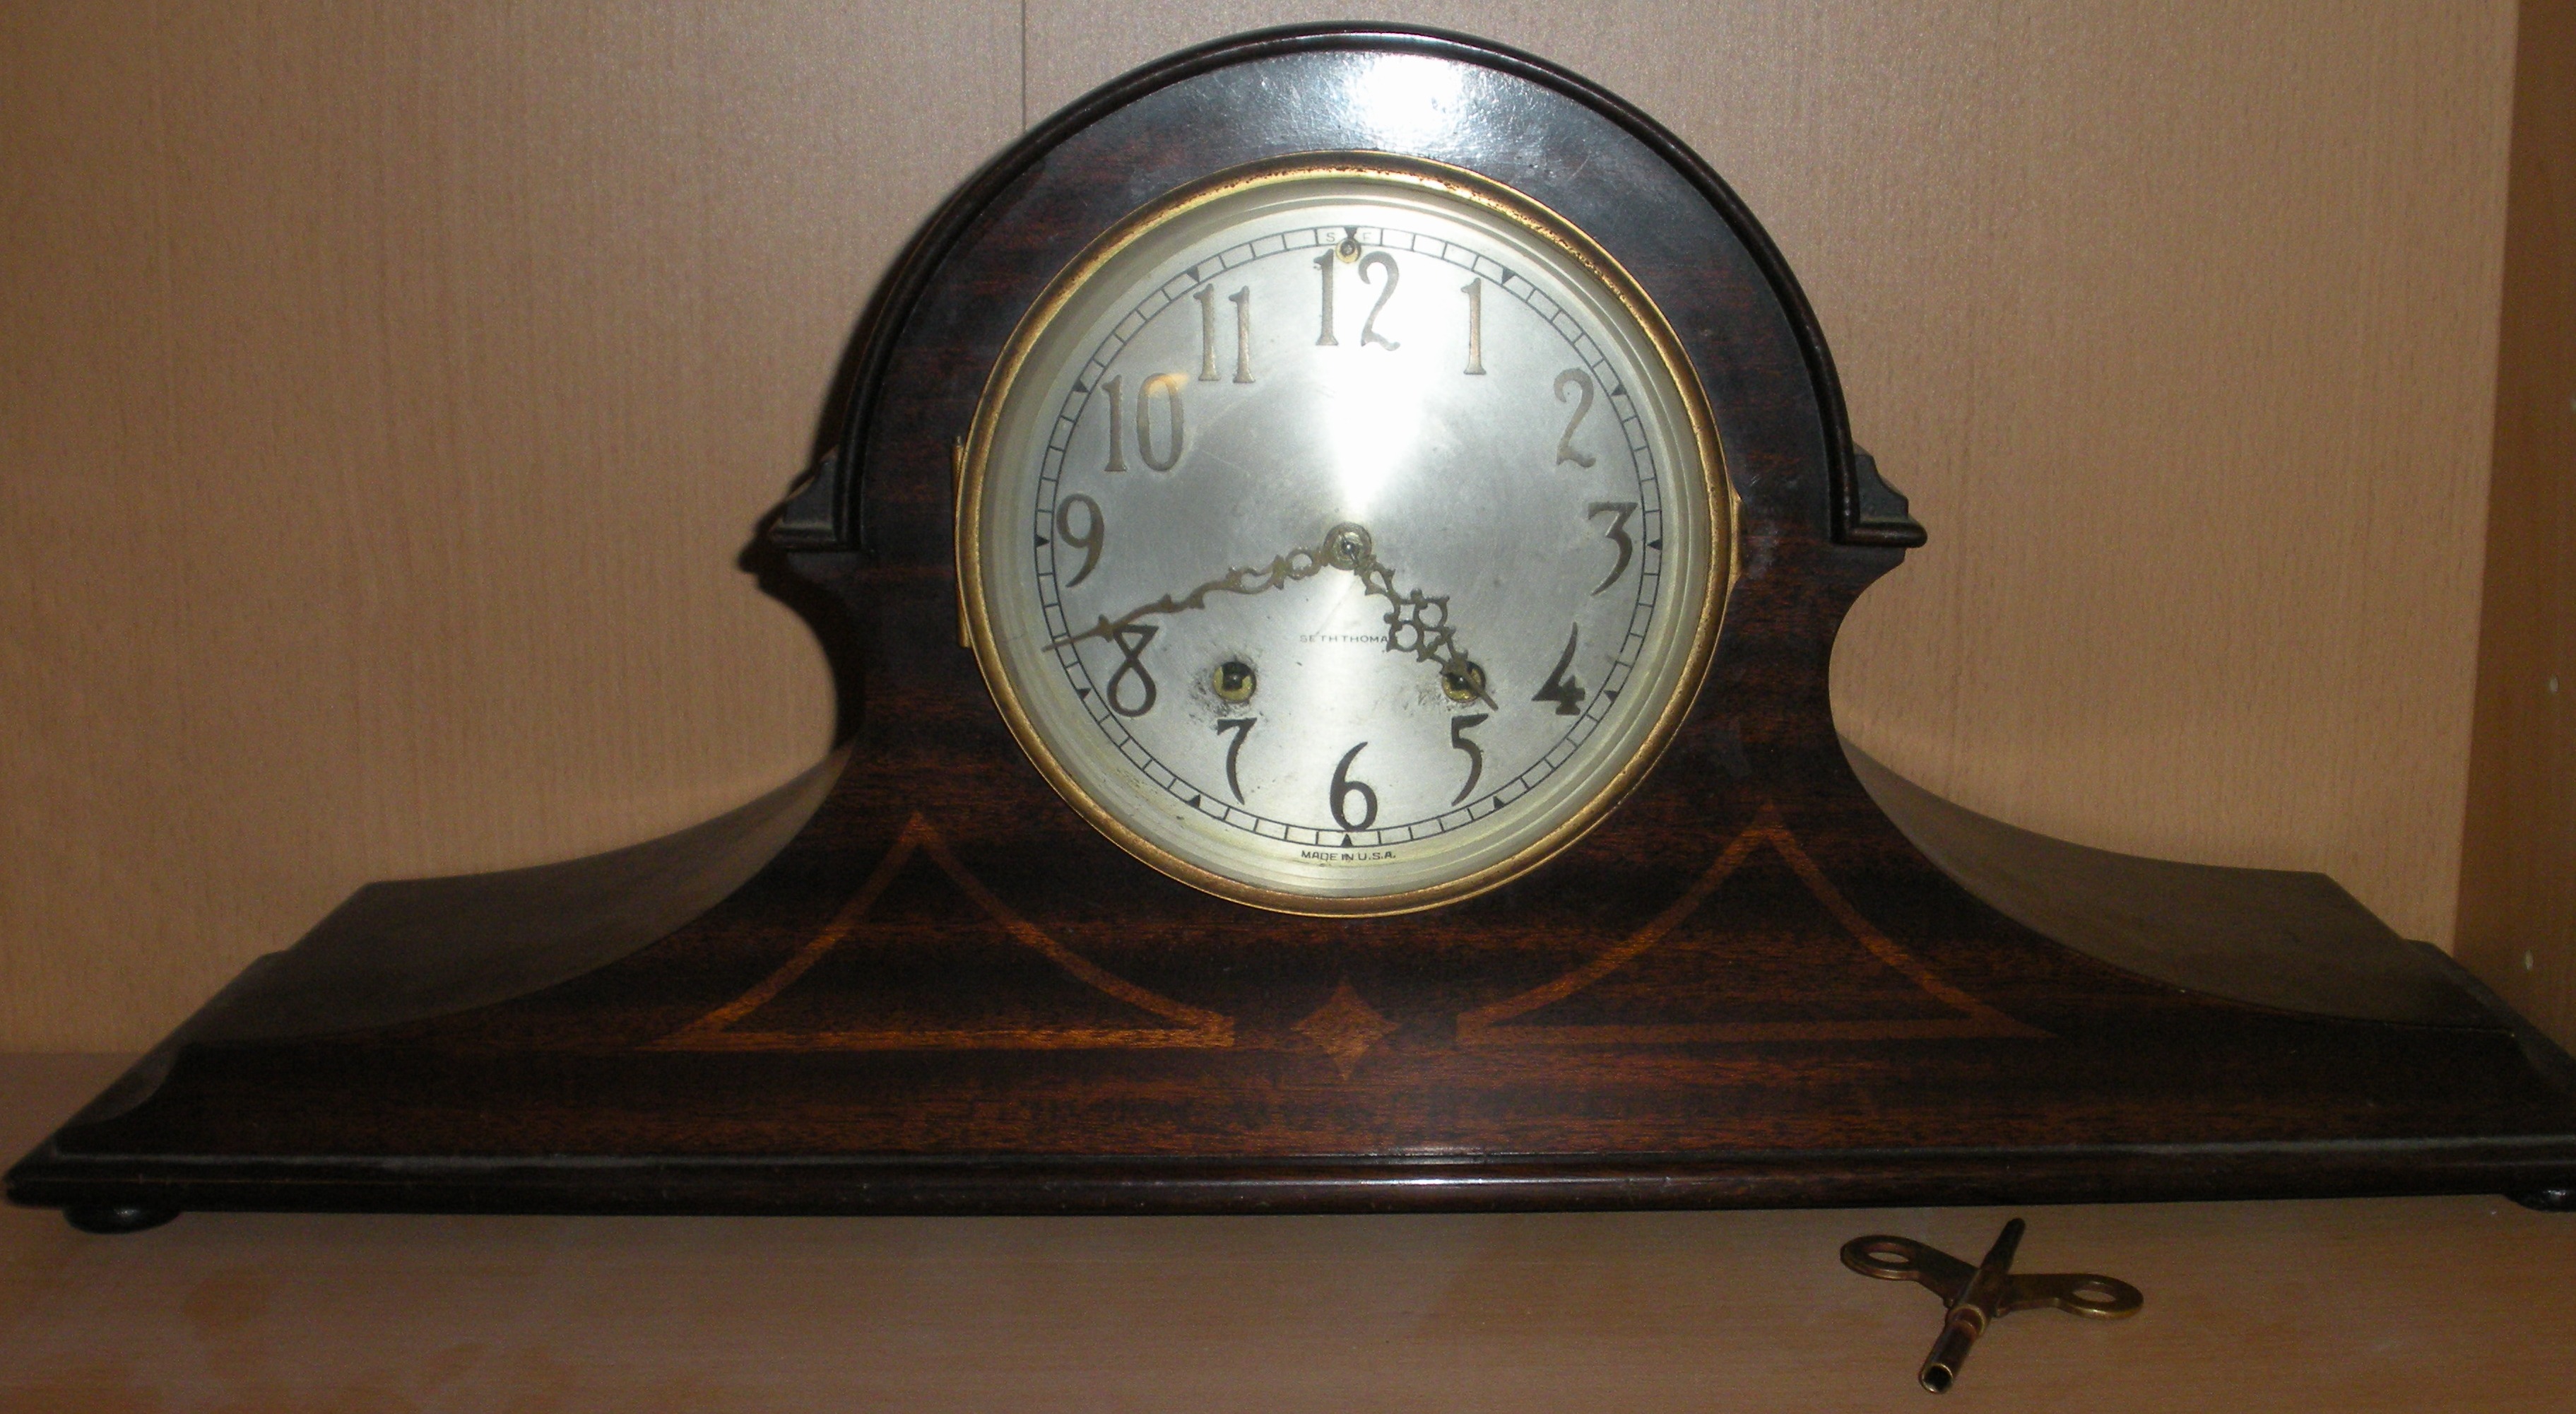 Shelf Clocks Mantel clock - Wikipedia